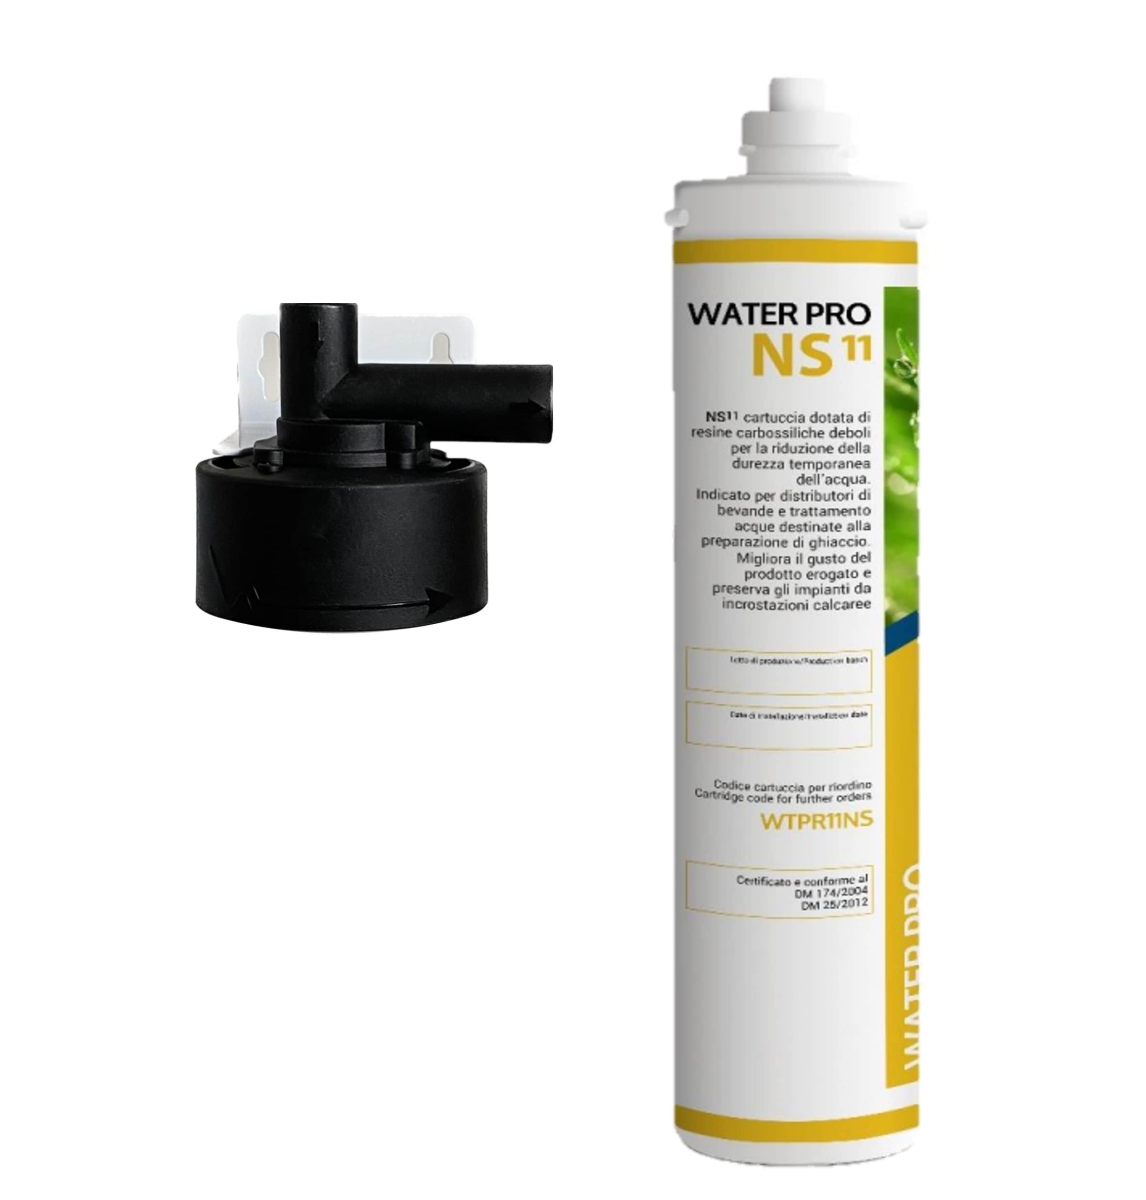 Water Pro NS11 mit Filterkopf